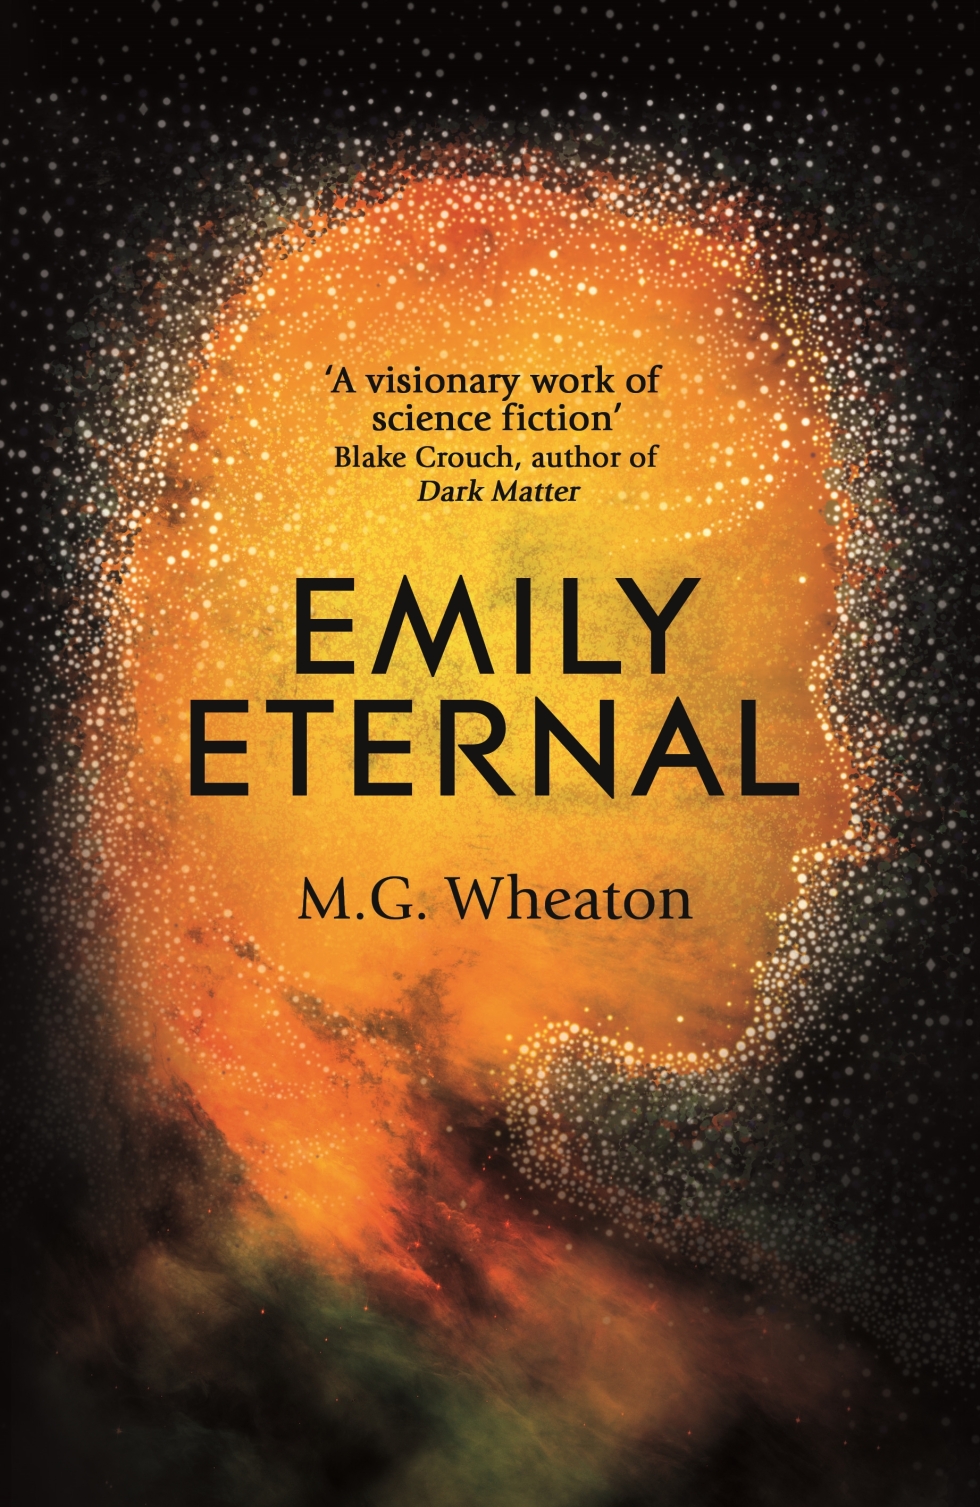 Emily Eternal by M. G. Wheaton hardback jacket.jpg